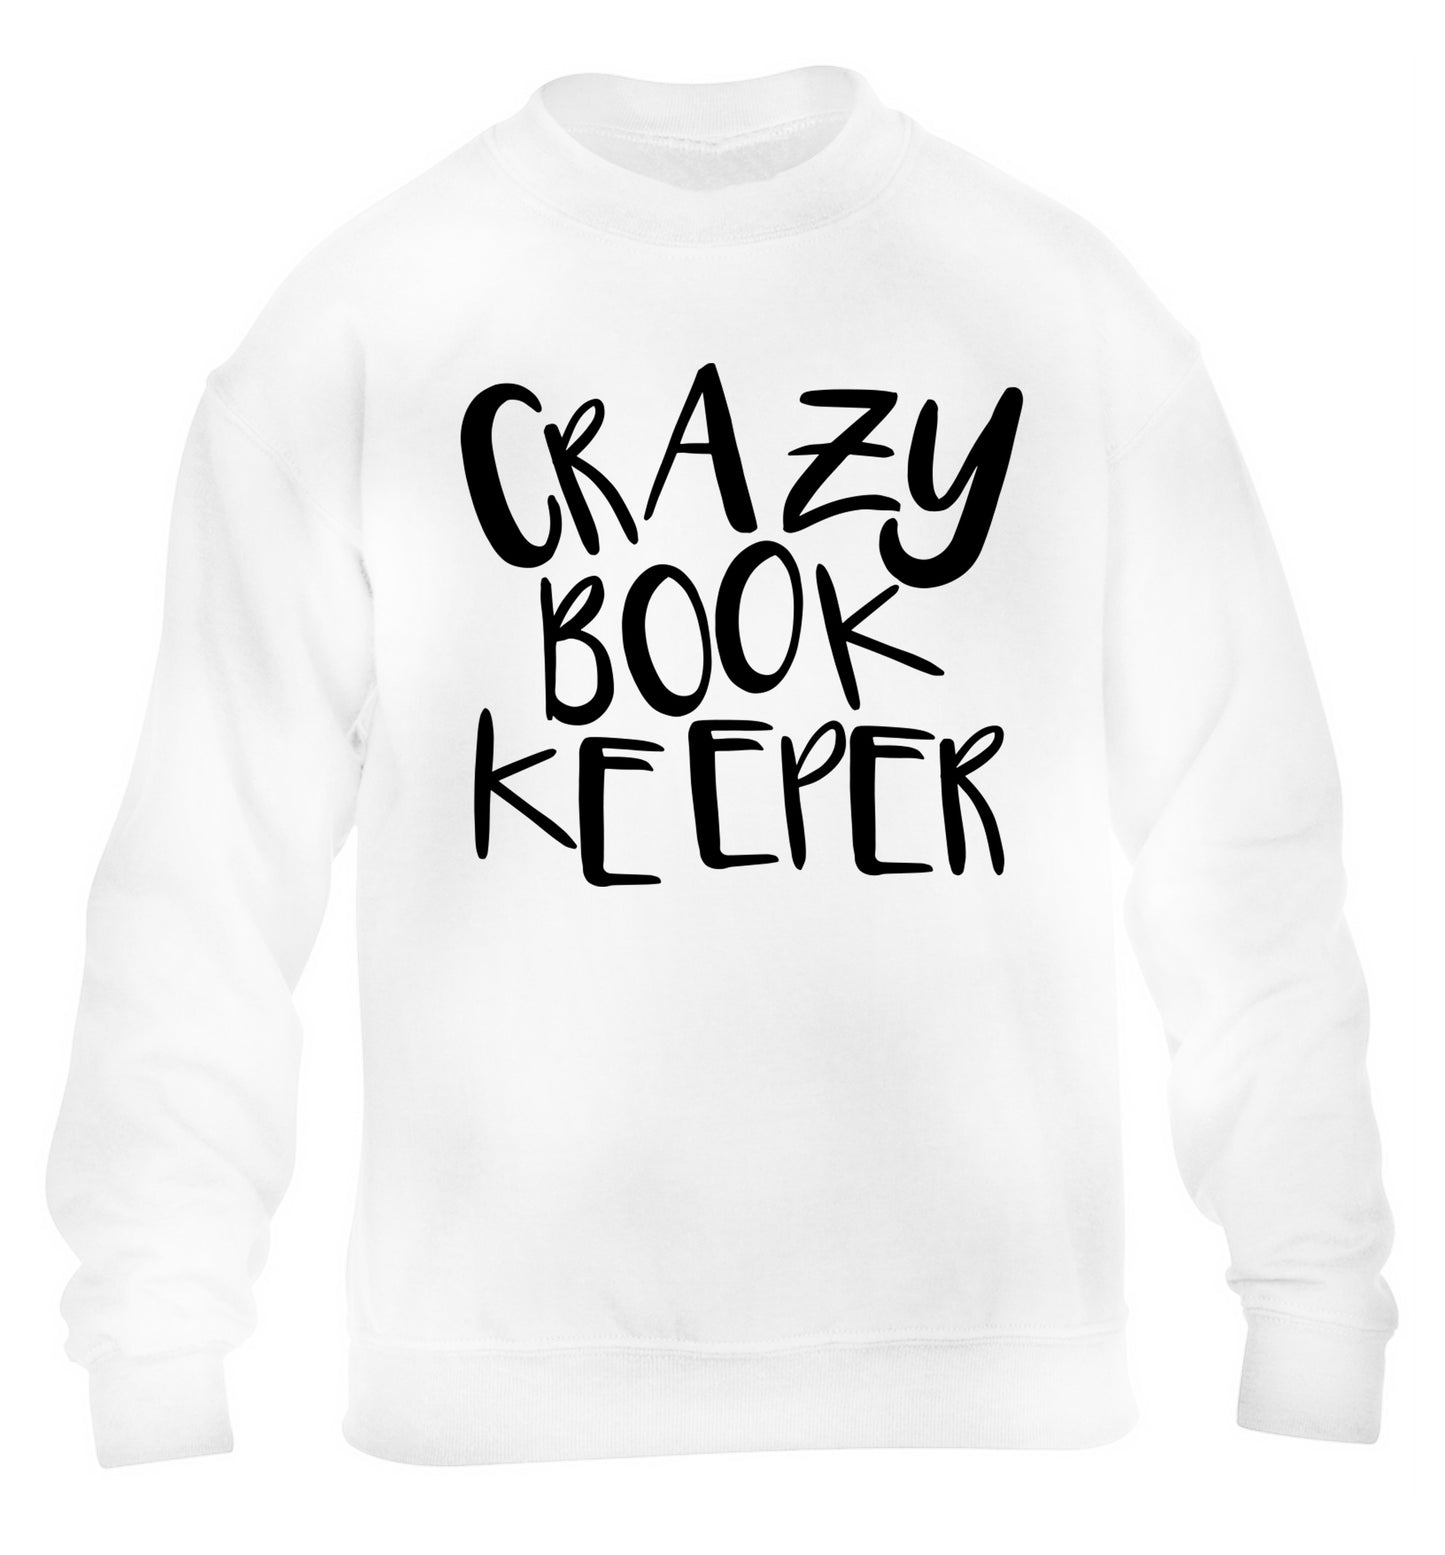 Crazy bookkeeper children's white sweater 12-13 Years